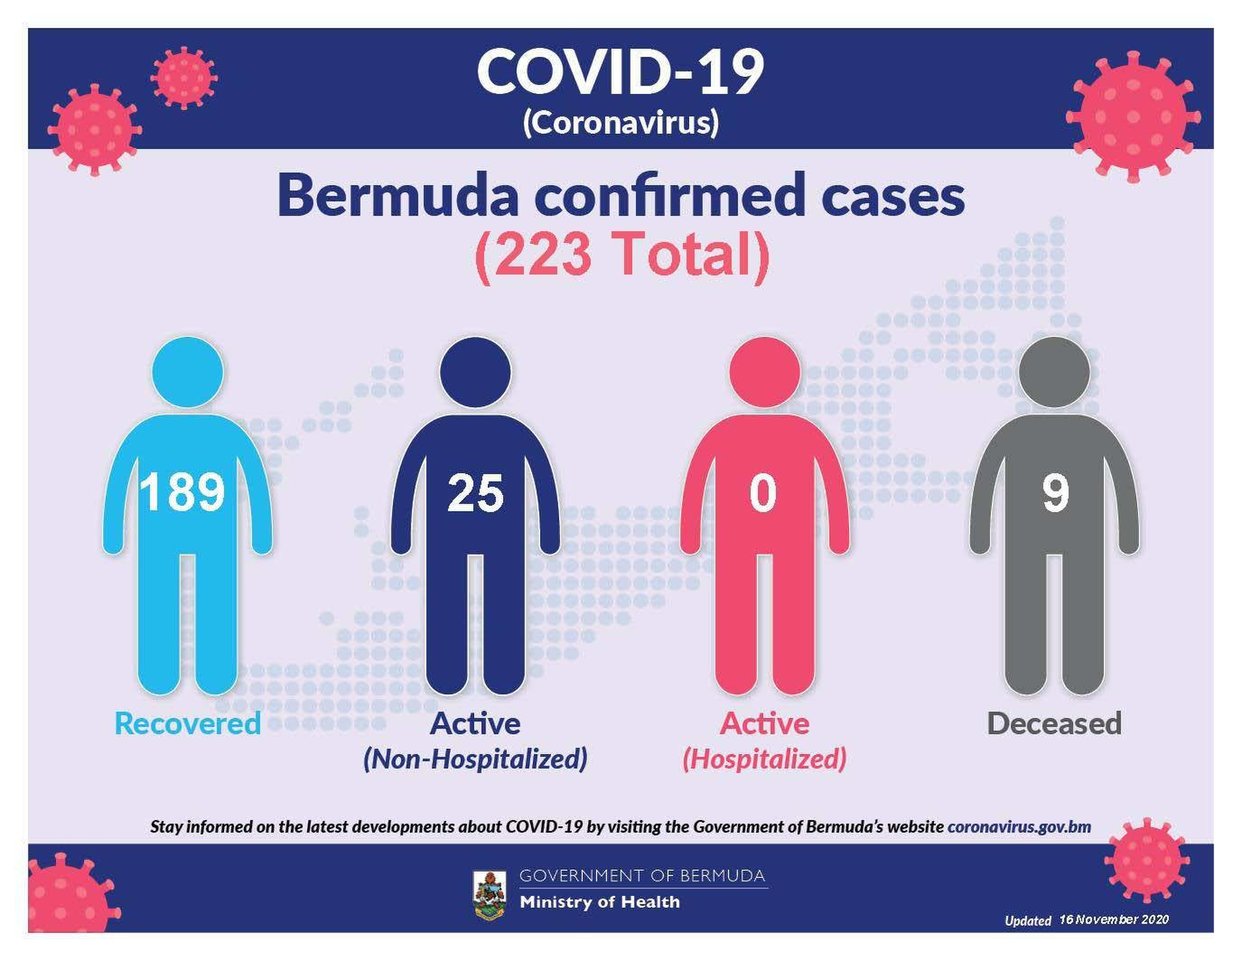 One new COVID-19 case reported in Bermuda, 16 November